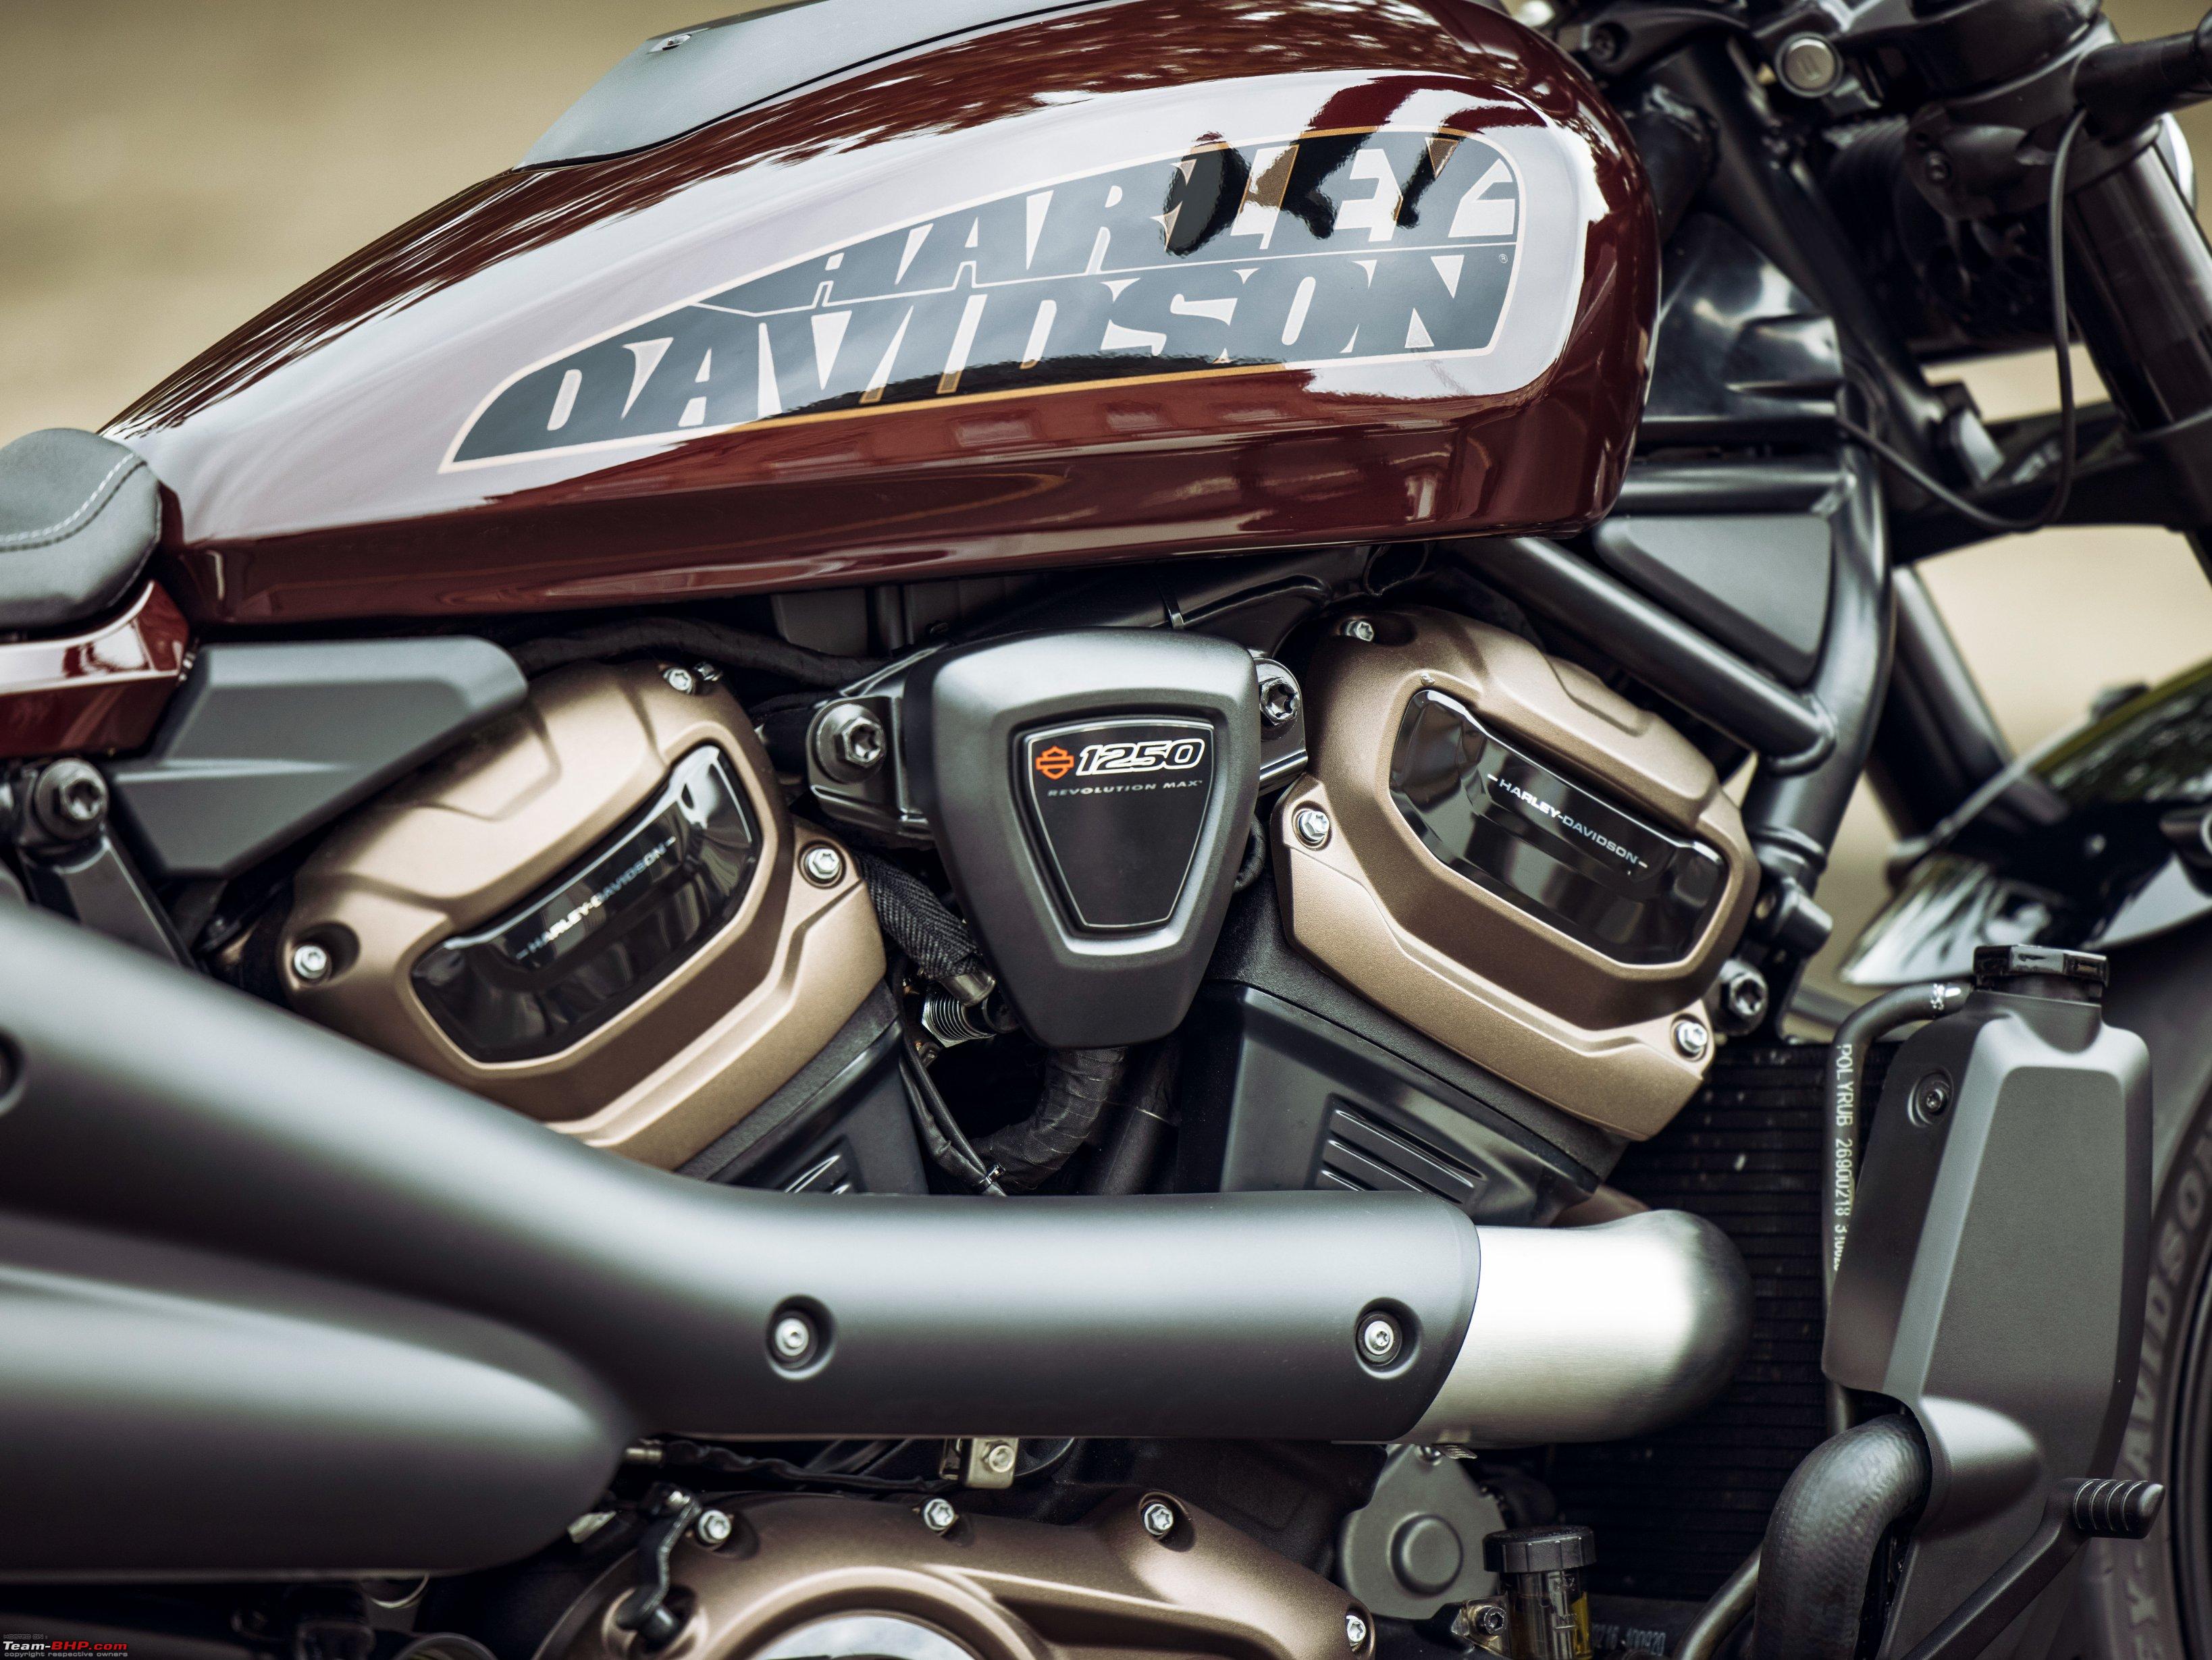 Inside Harley-Davidson's New DOHC Revolution Max 1250 V-Twin